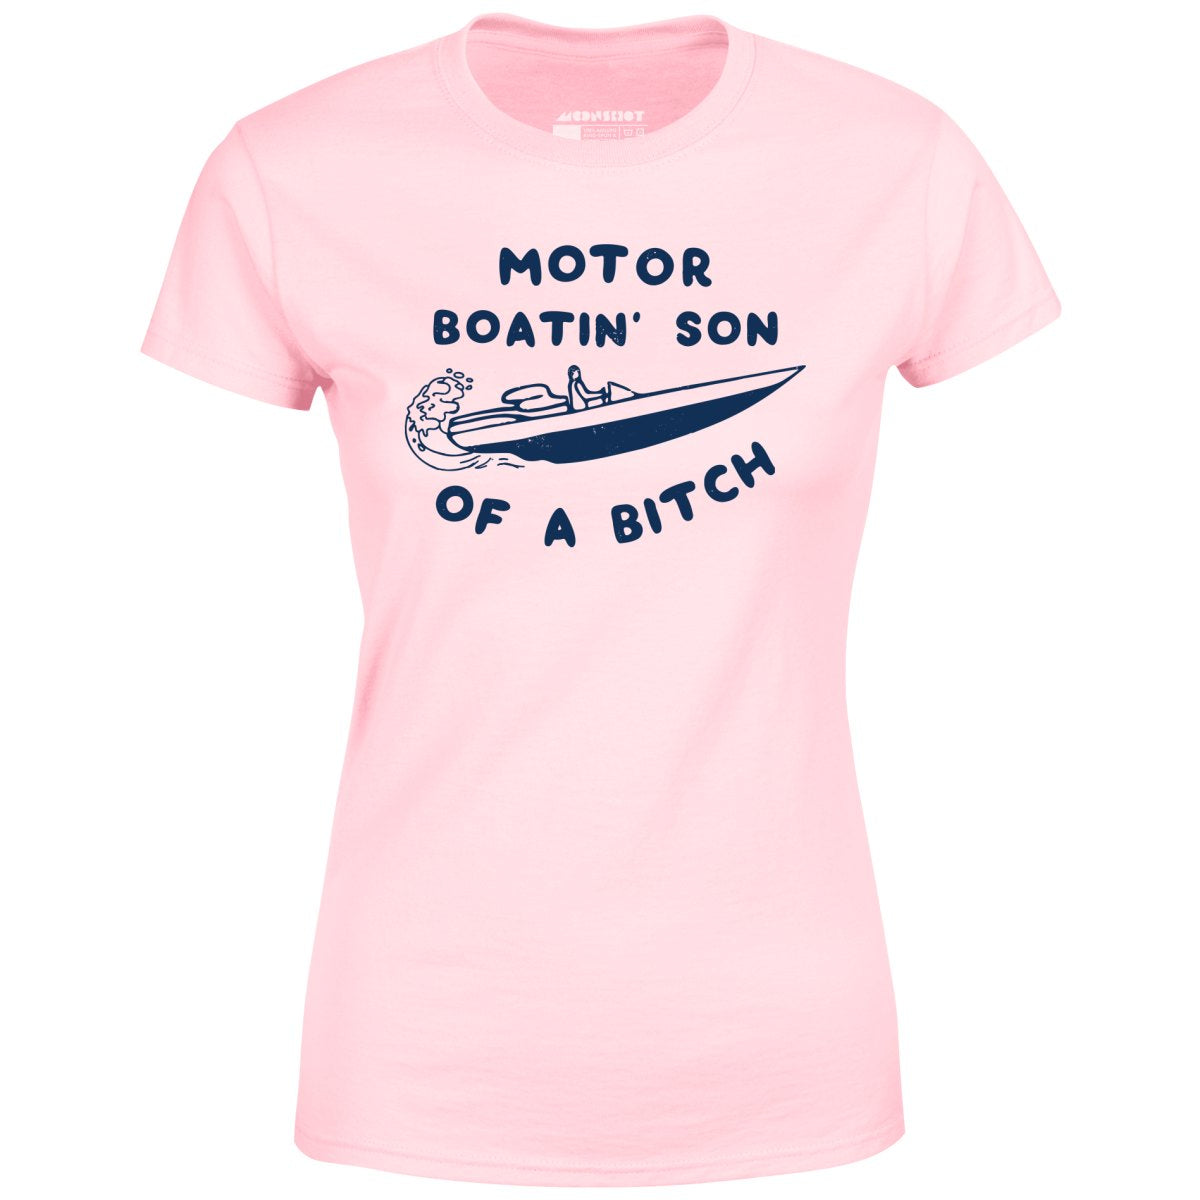 Motor Boatin' Son of a Bitch - Women's T-Shirt